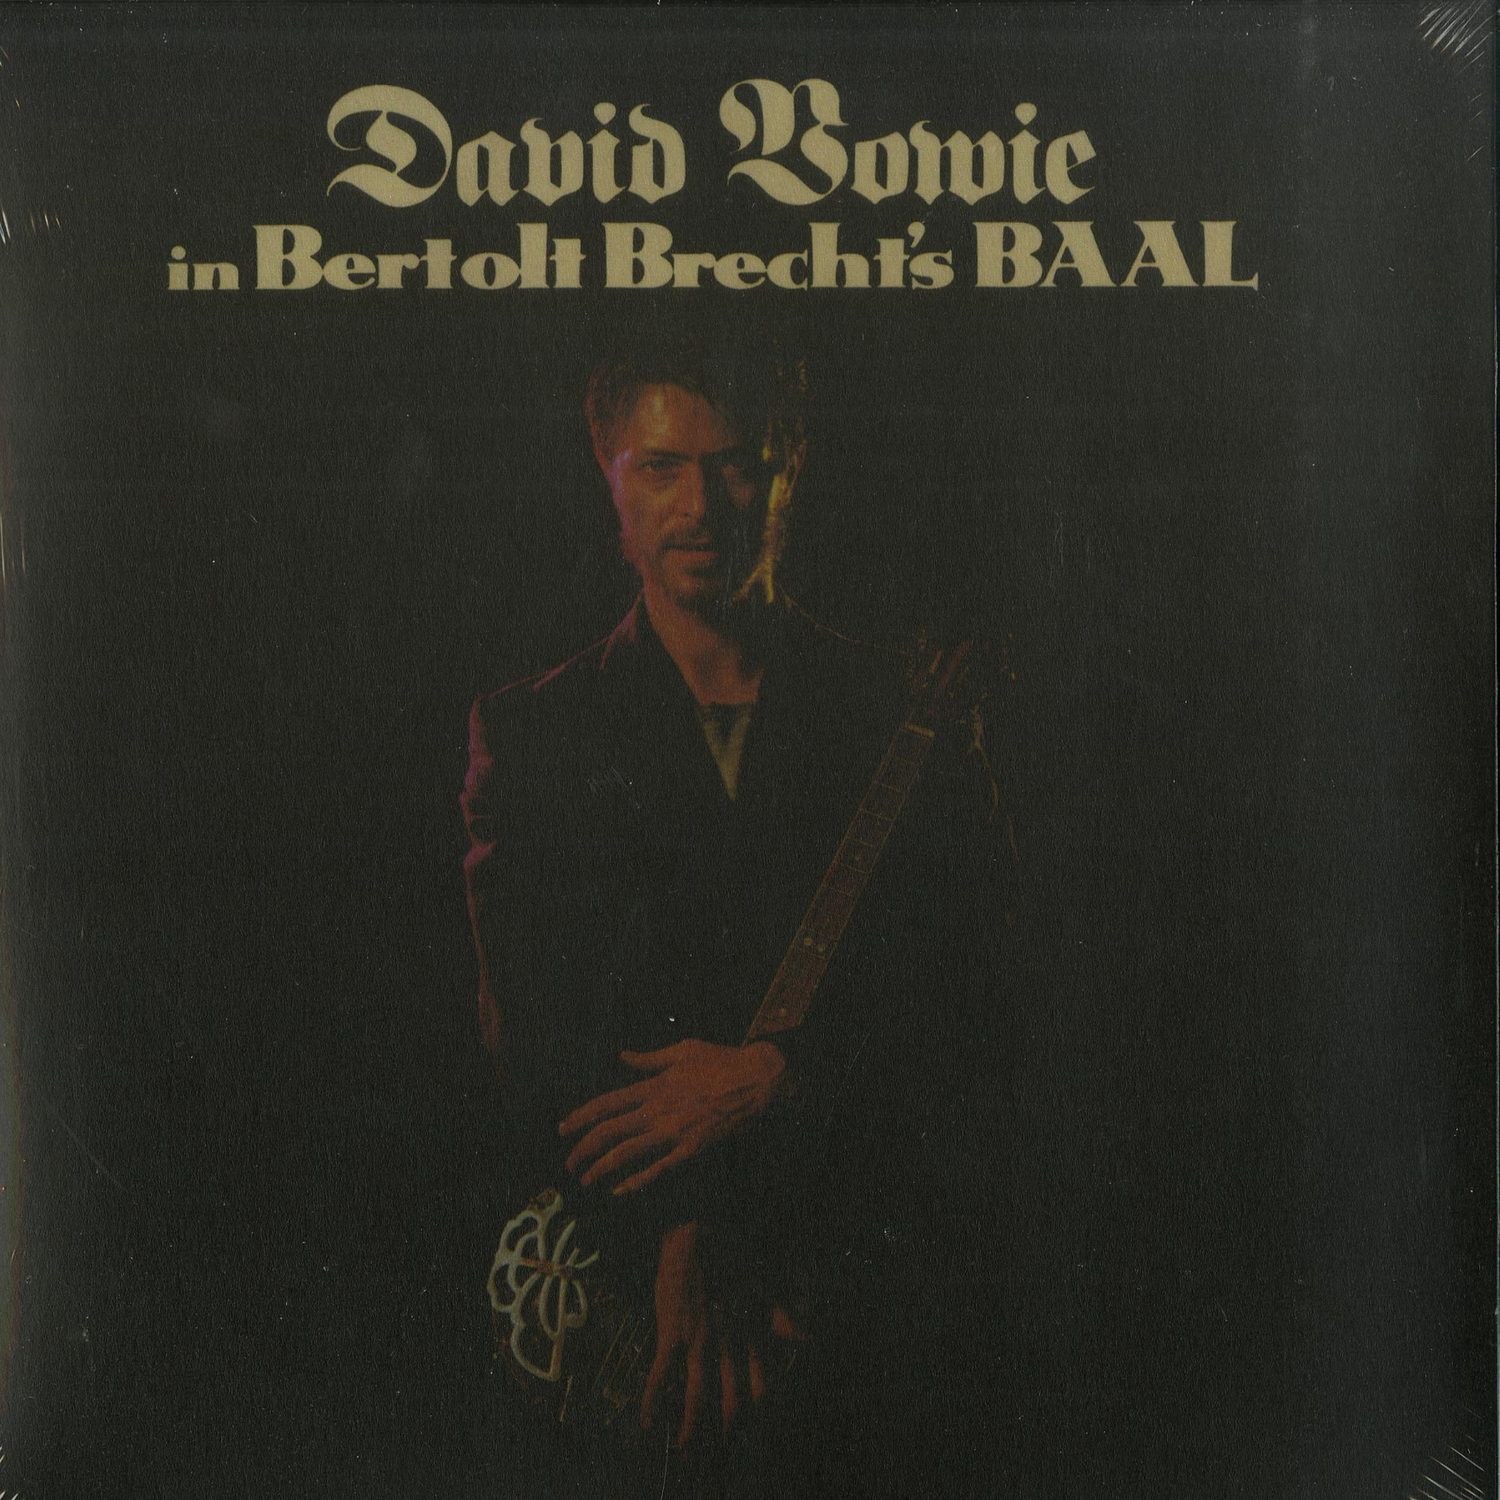 David Bowie - IN BERTHOLT BRECHTS BAAL 